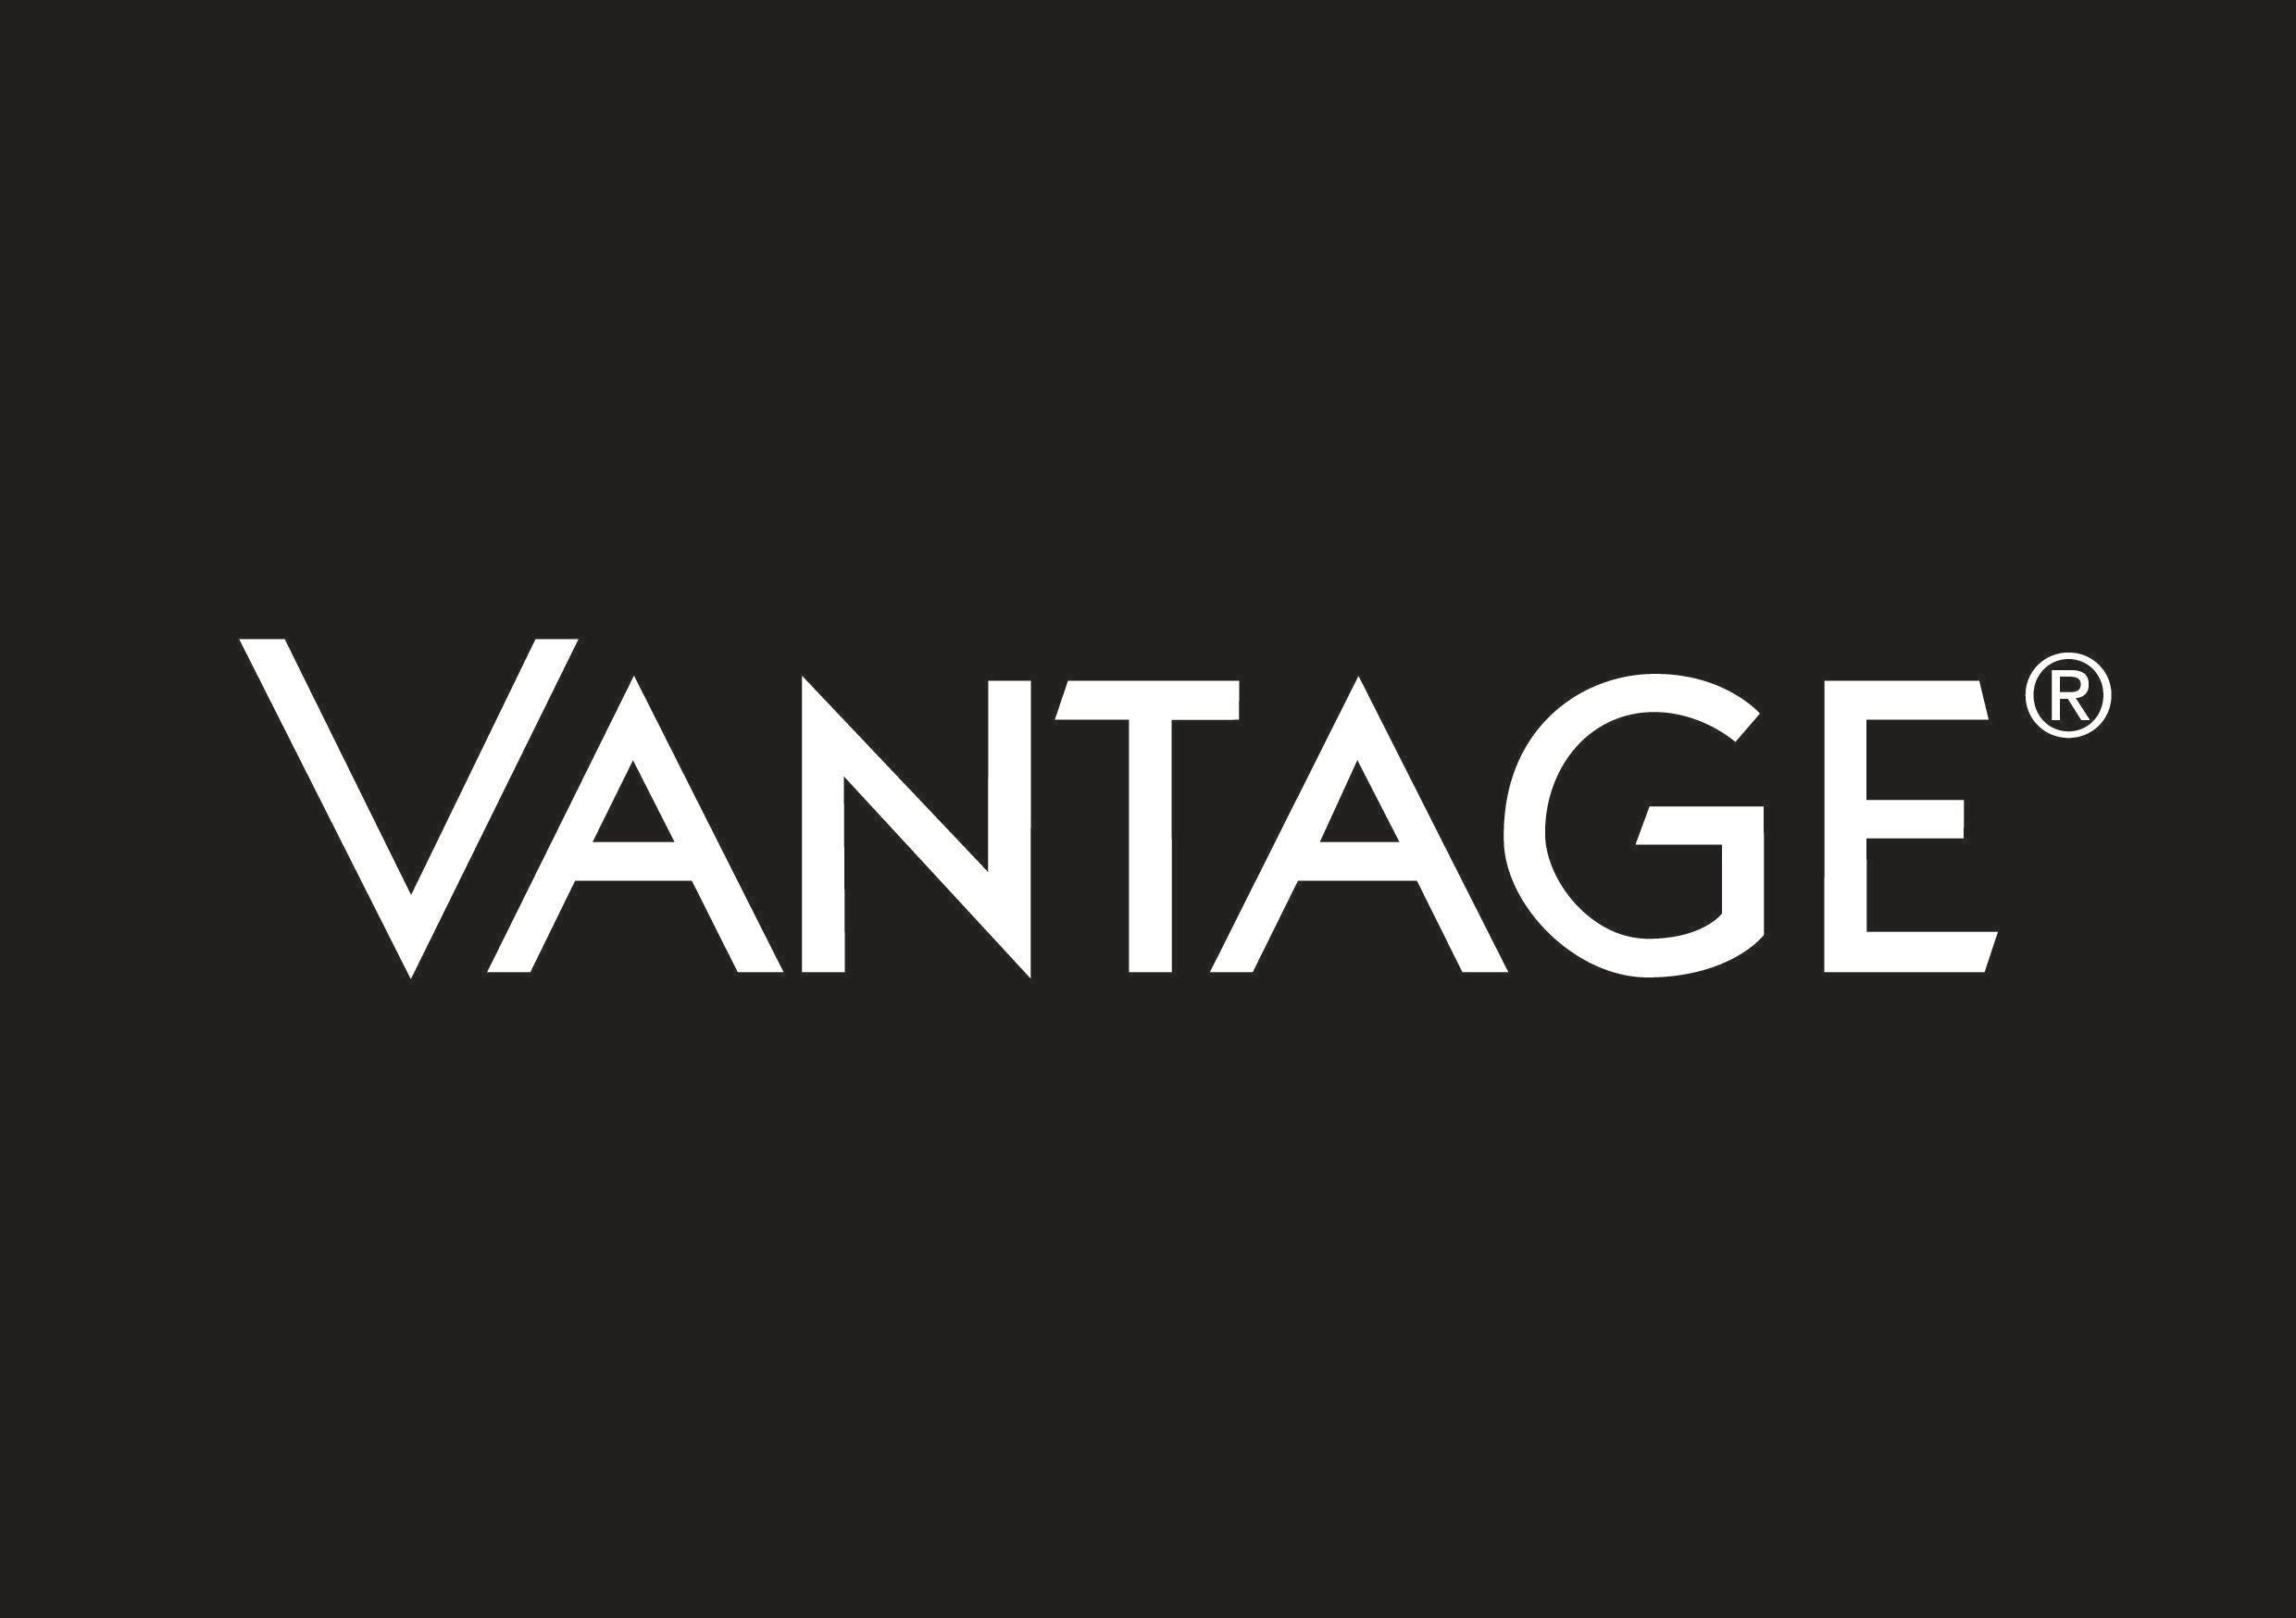 Vantage Logo - Downloads